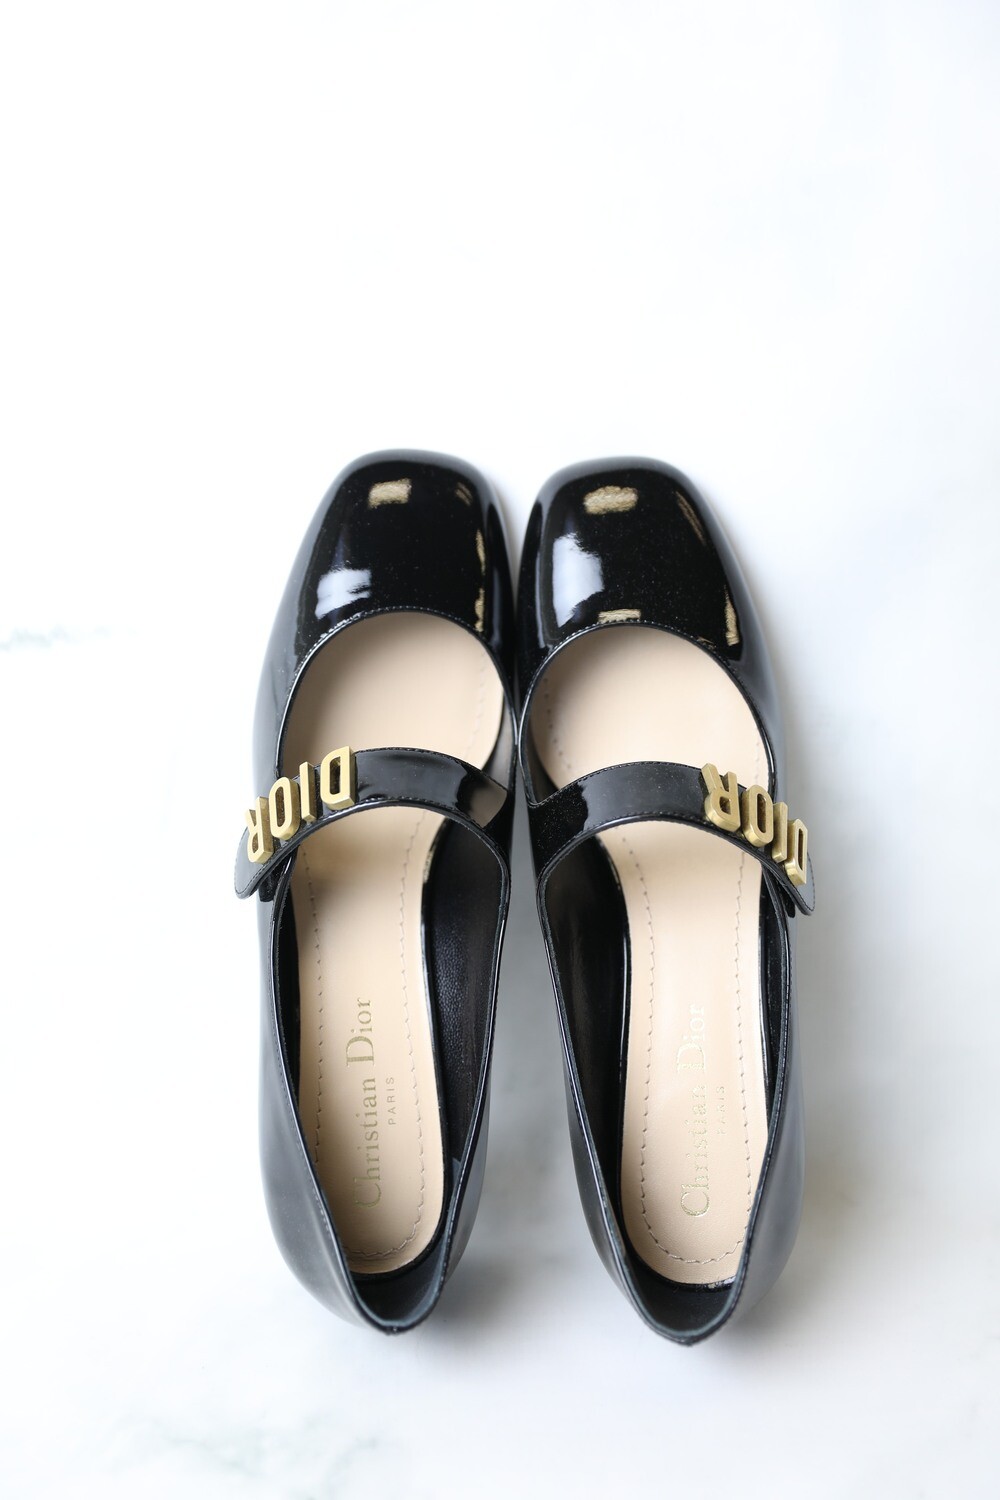 Dior Baby D Mid Heels, Black Patent, Size 39, New in Box WA001